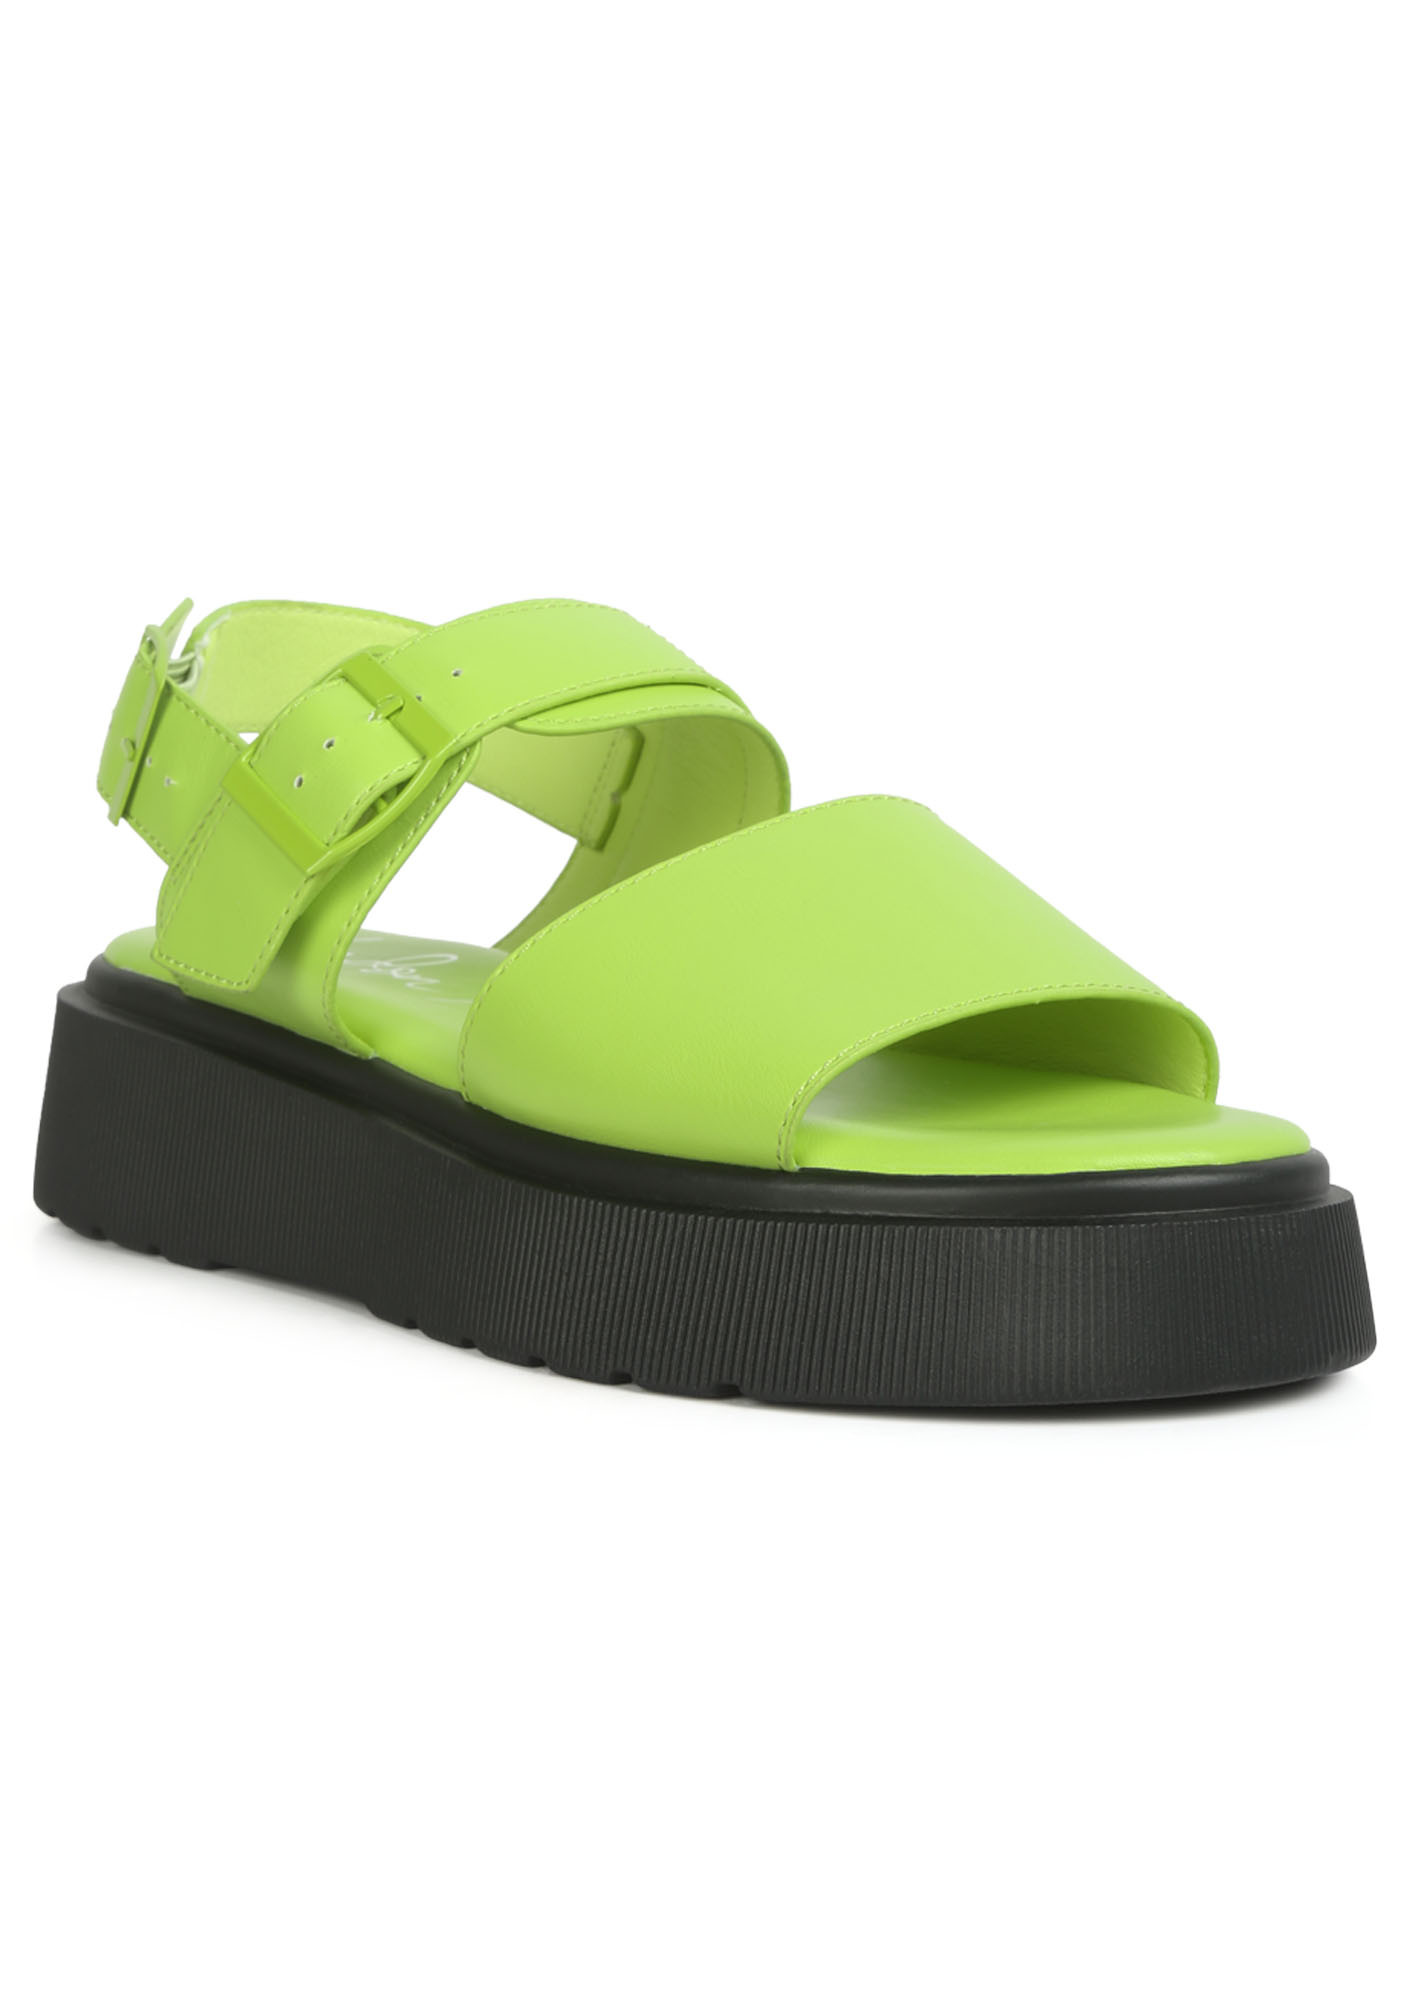 Share 58+ green platform sandals best - dedaotaonec